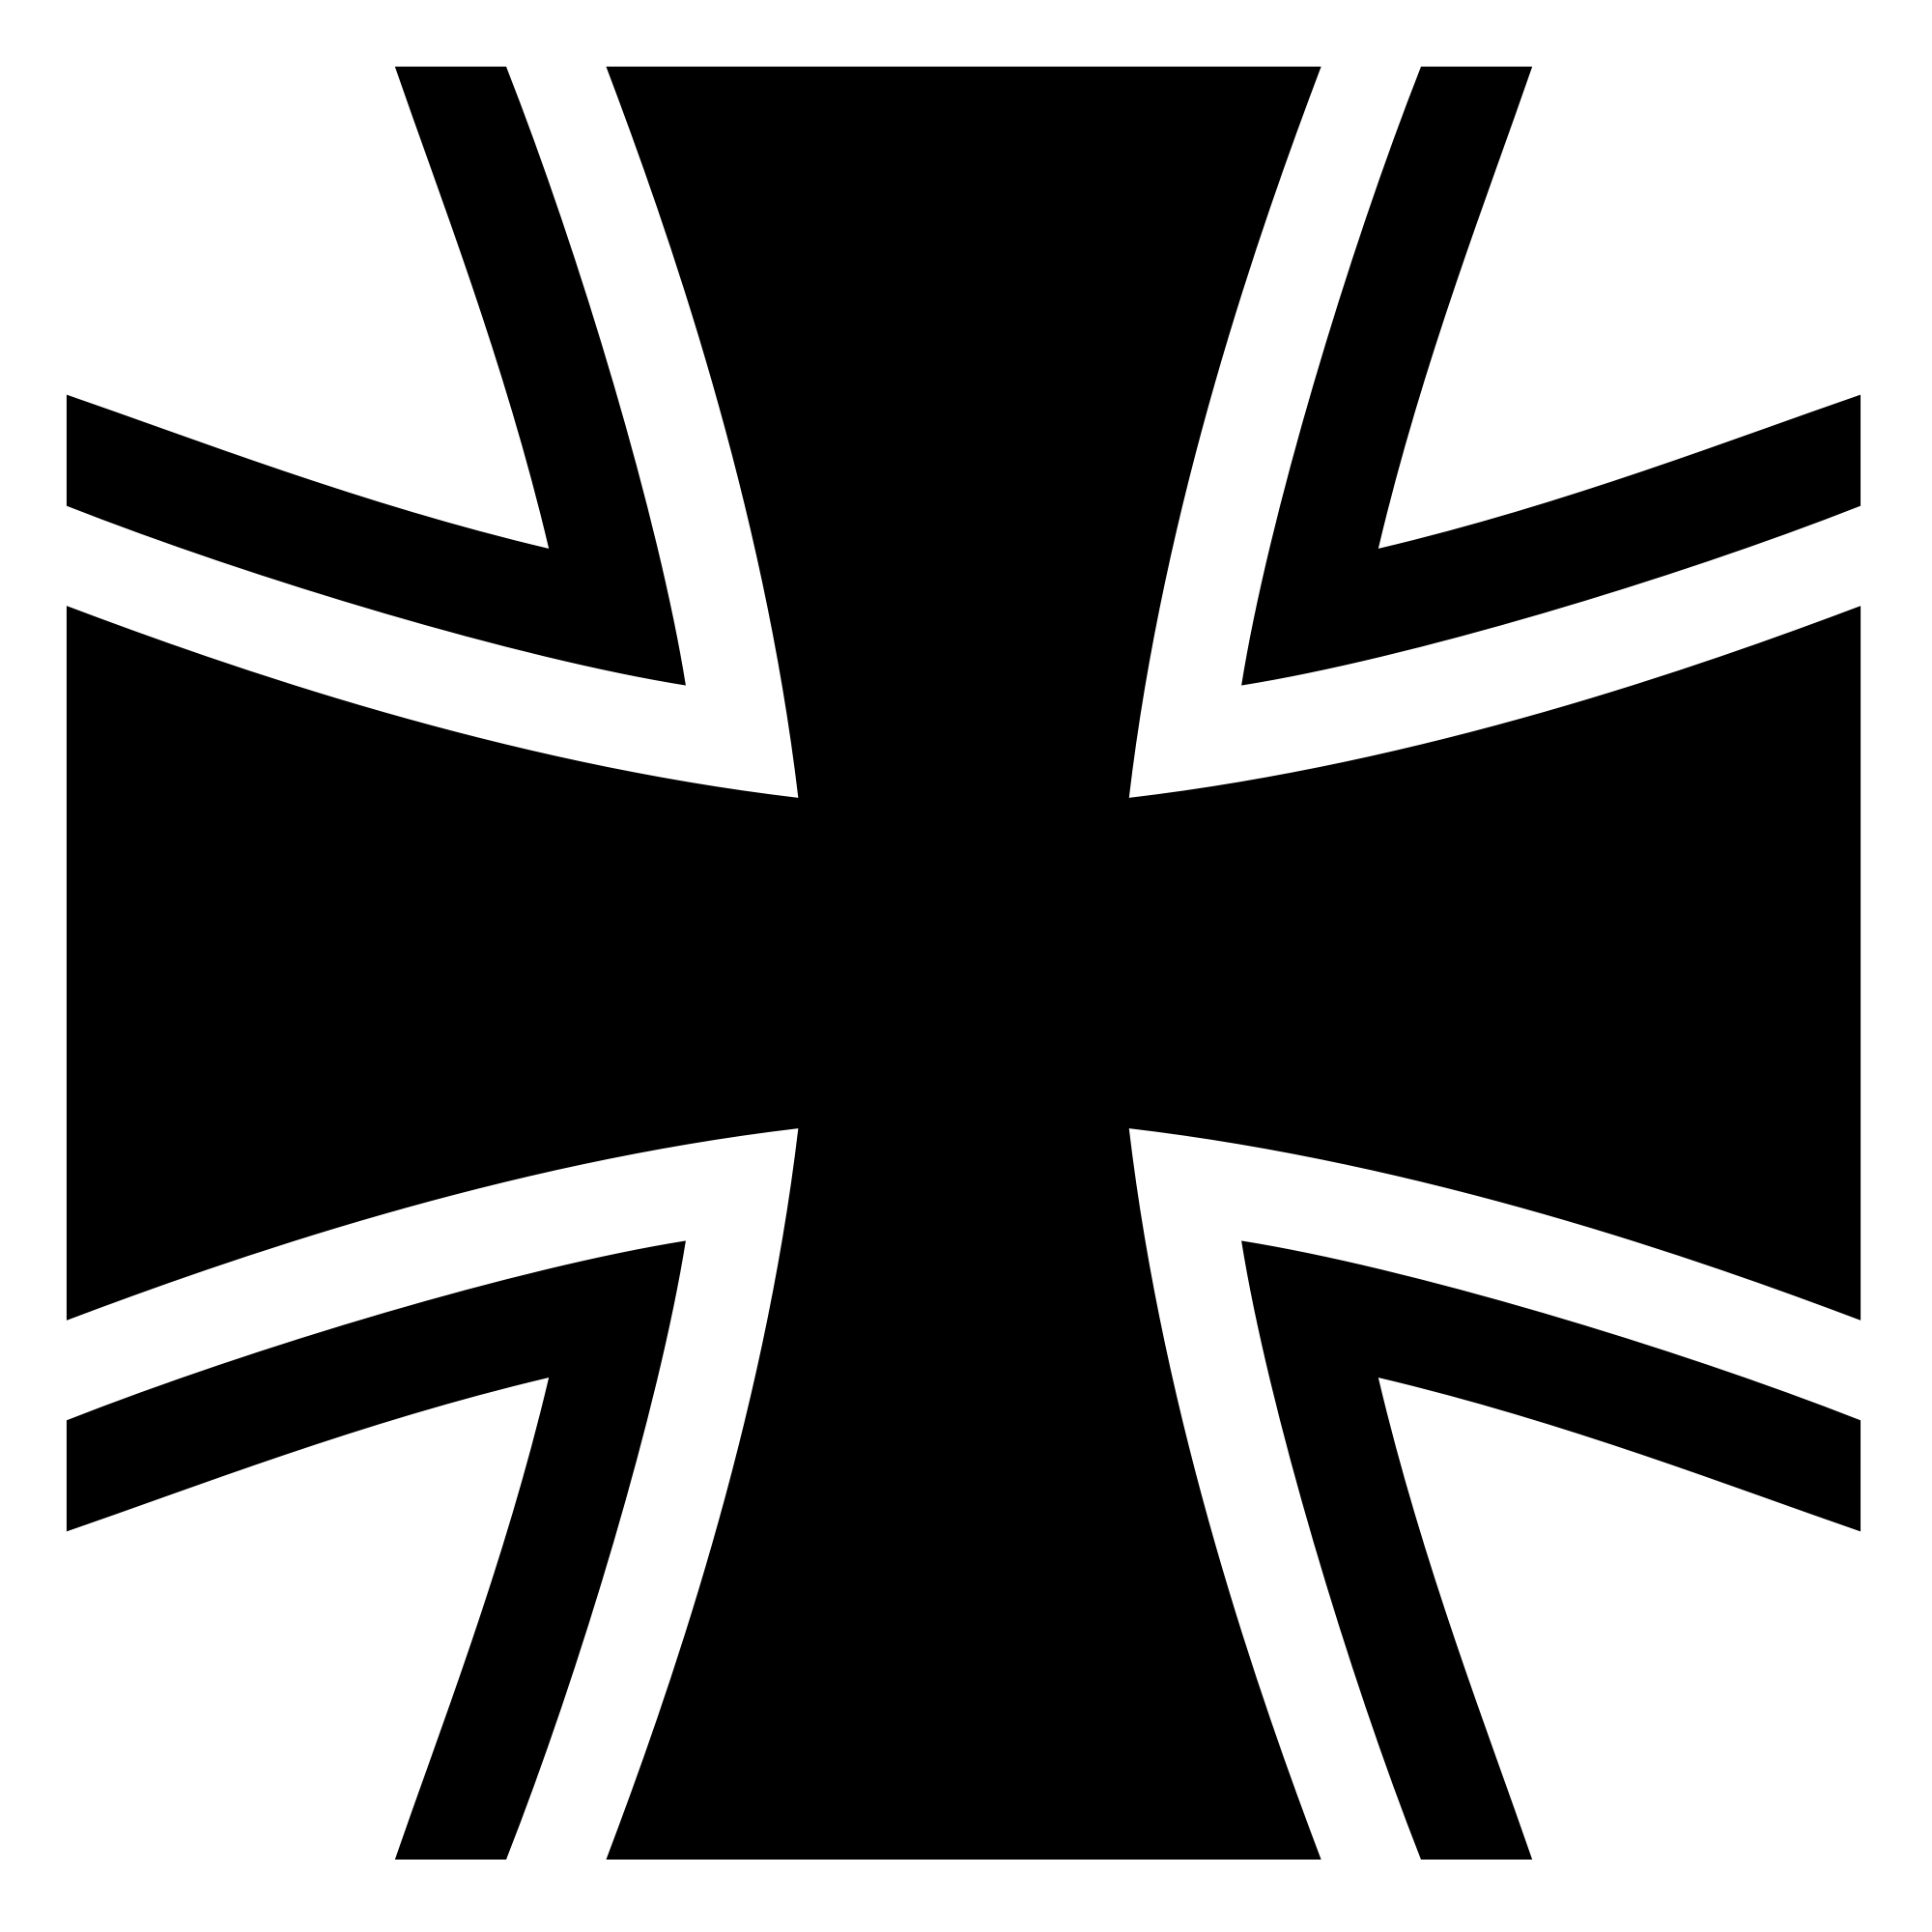 Iron Cross - Wikipedia, the free encyclopedia